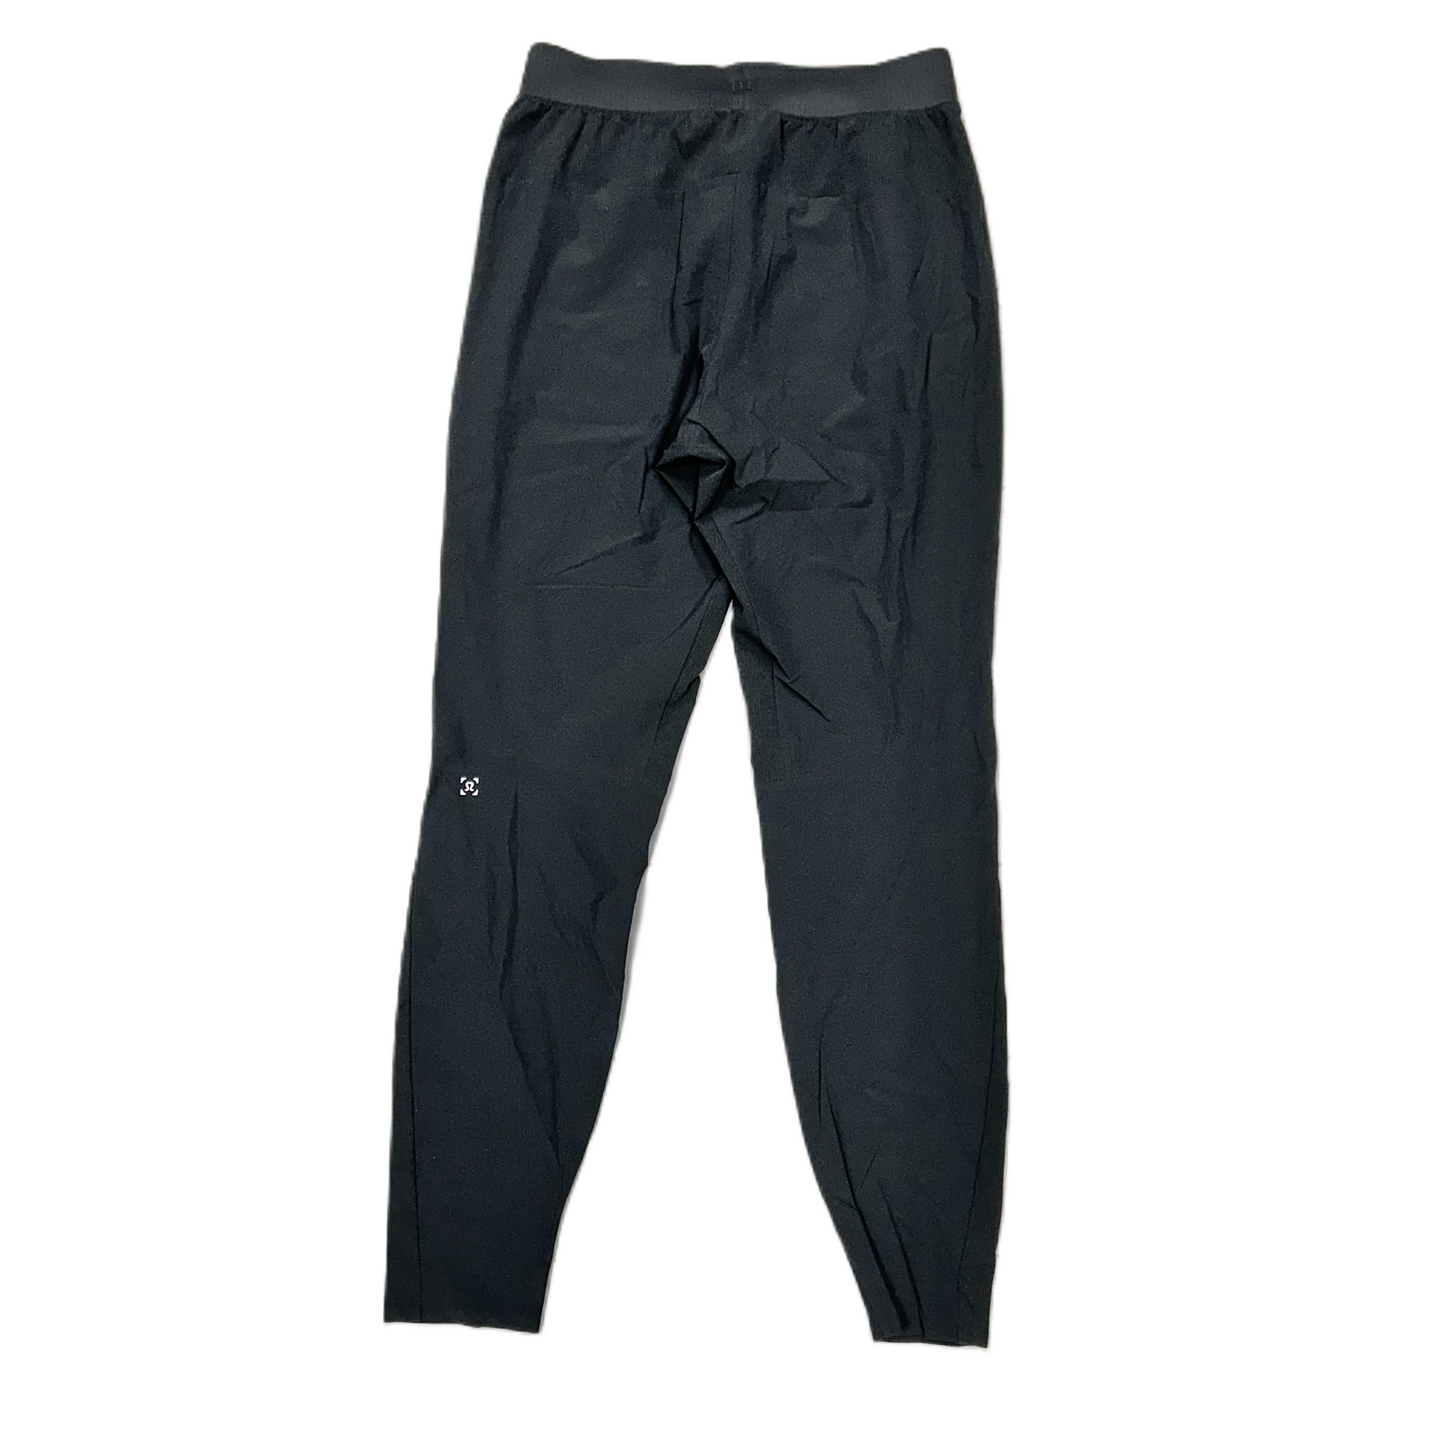 Athletic Pants By Lululemon  Size: Xs